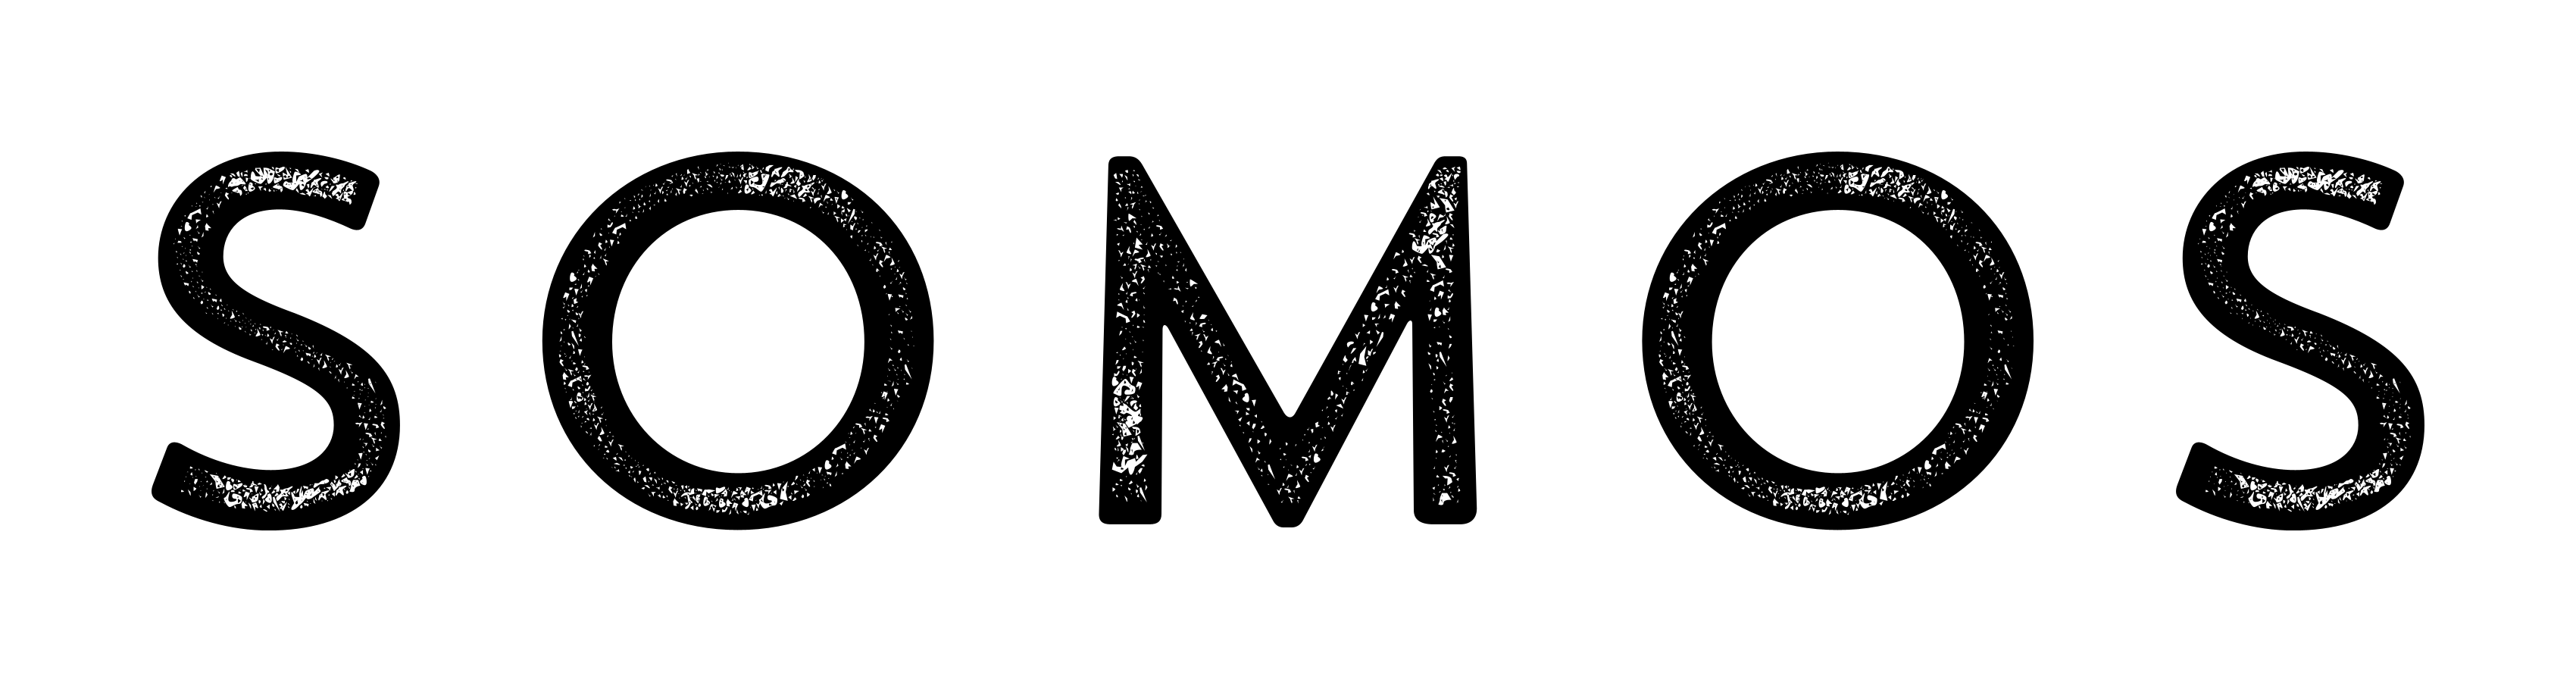 Black logo   transparent background   3400x900